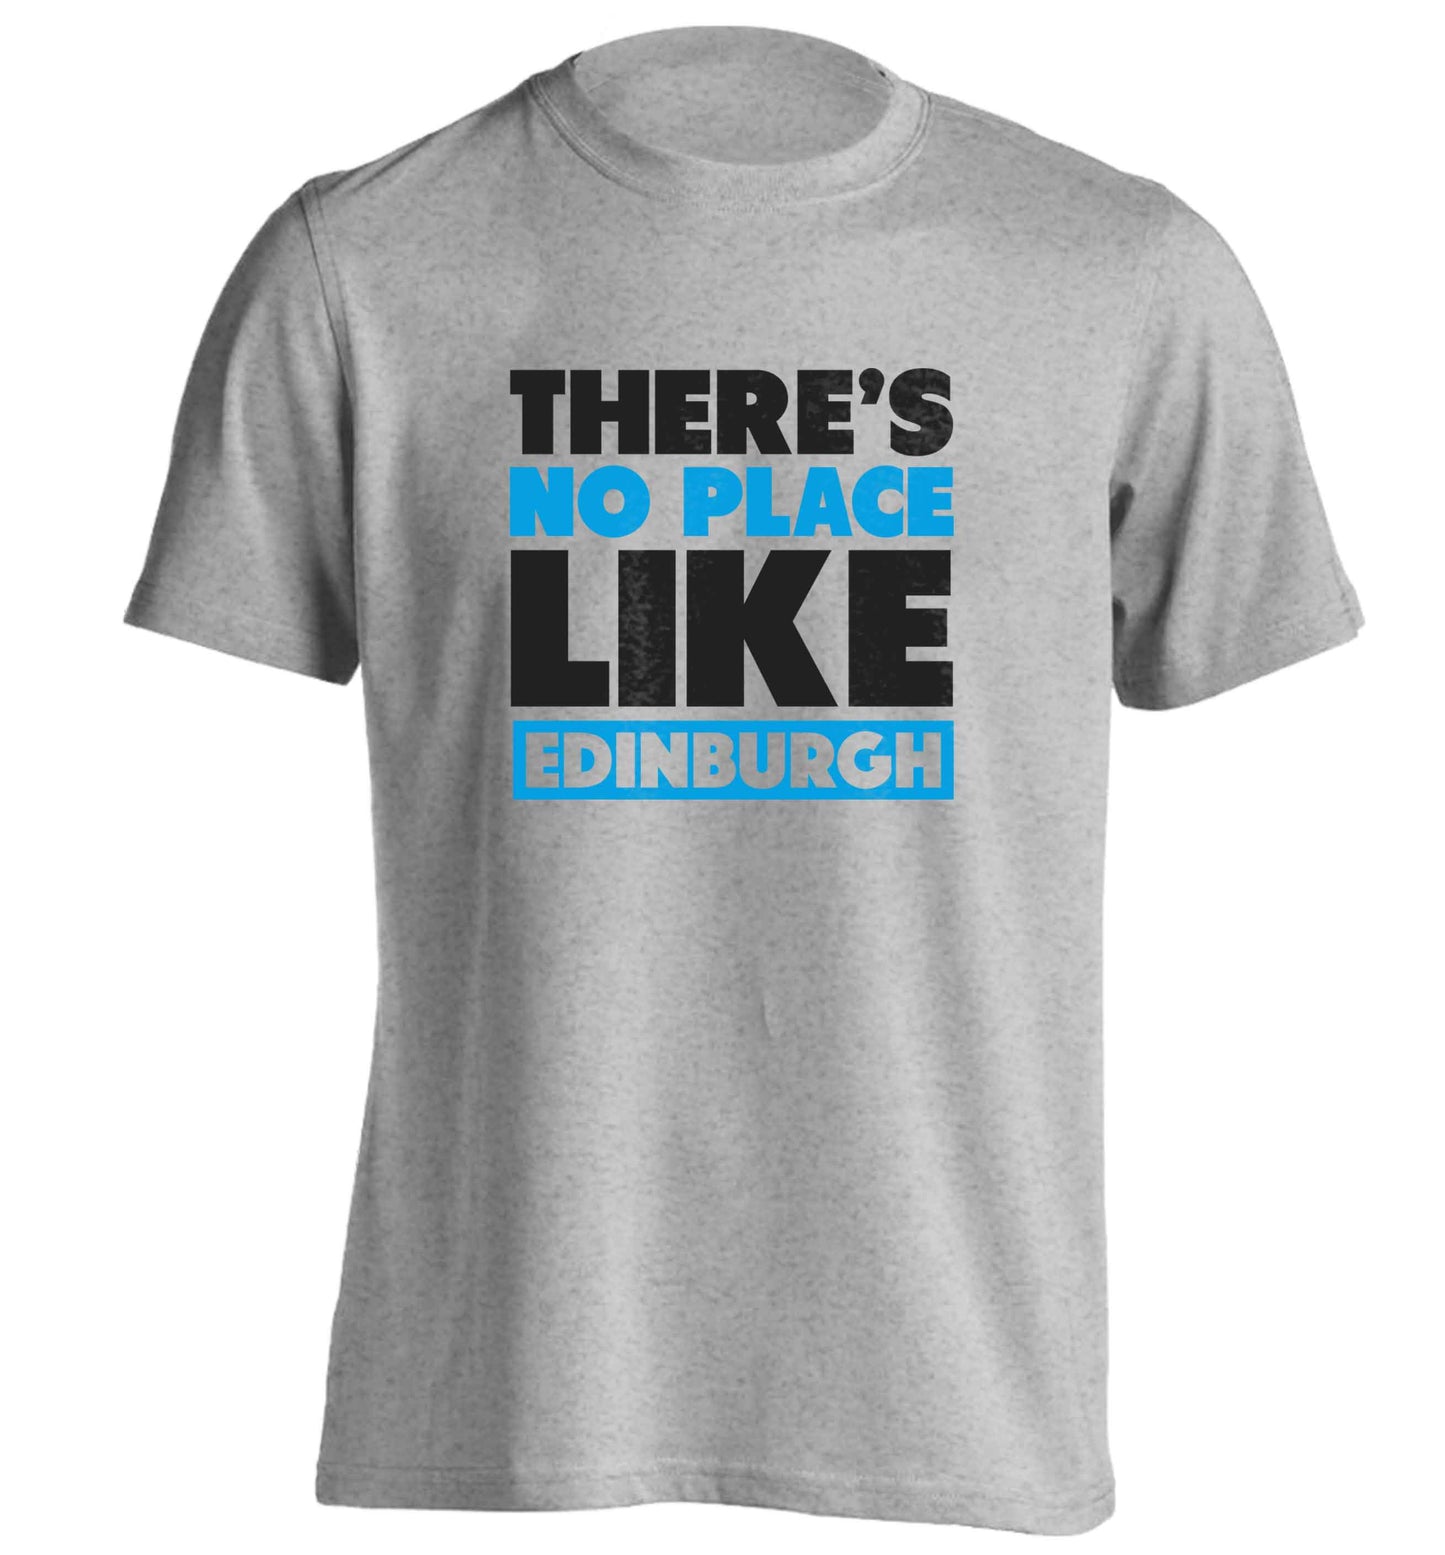 There's no place like Edinburgh adults unisex grey Tshirt 2XL